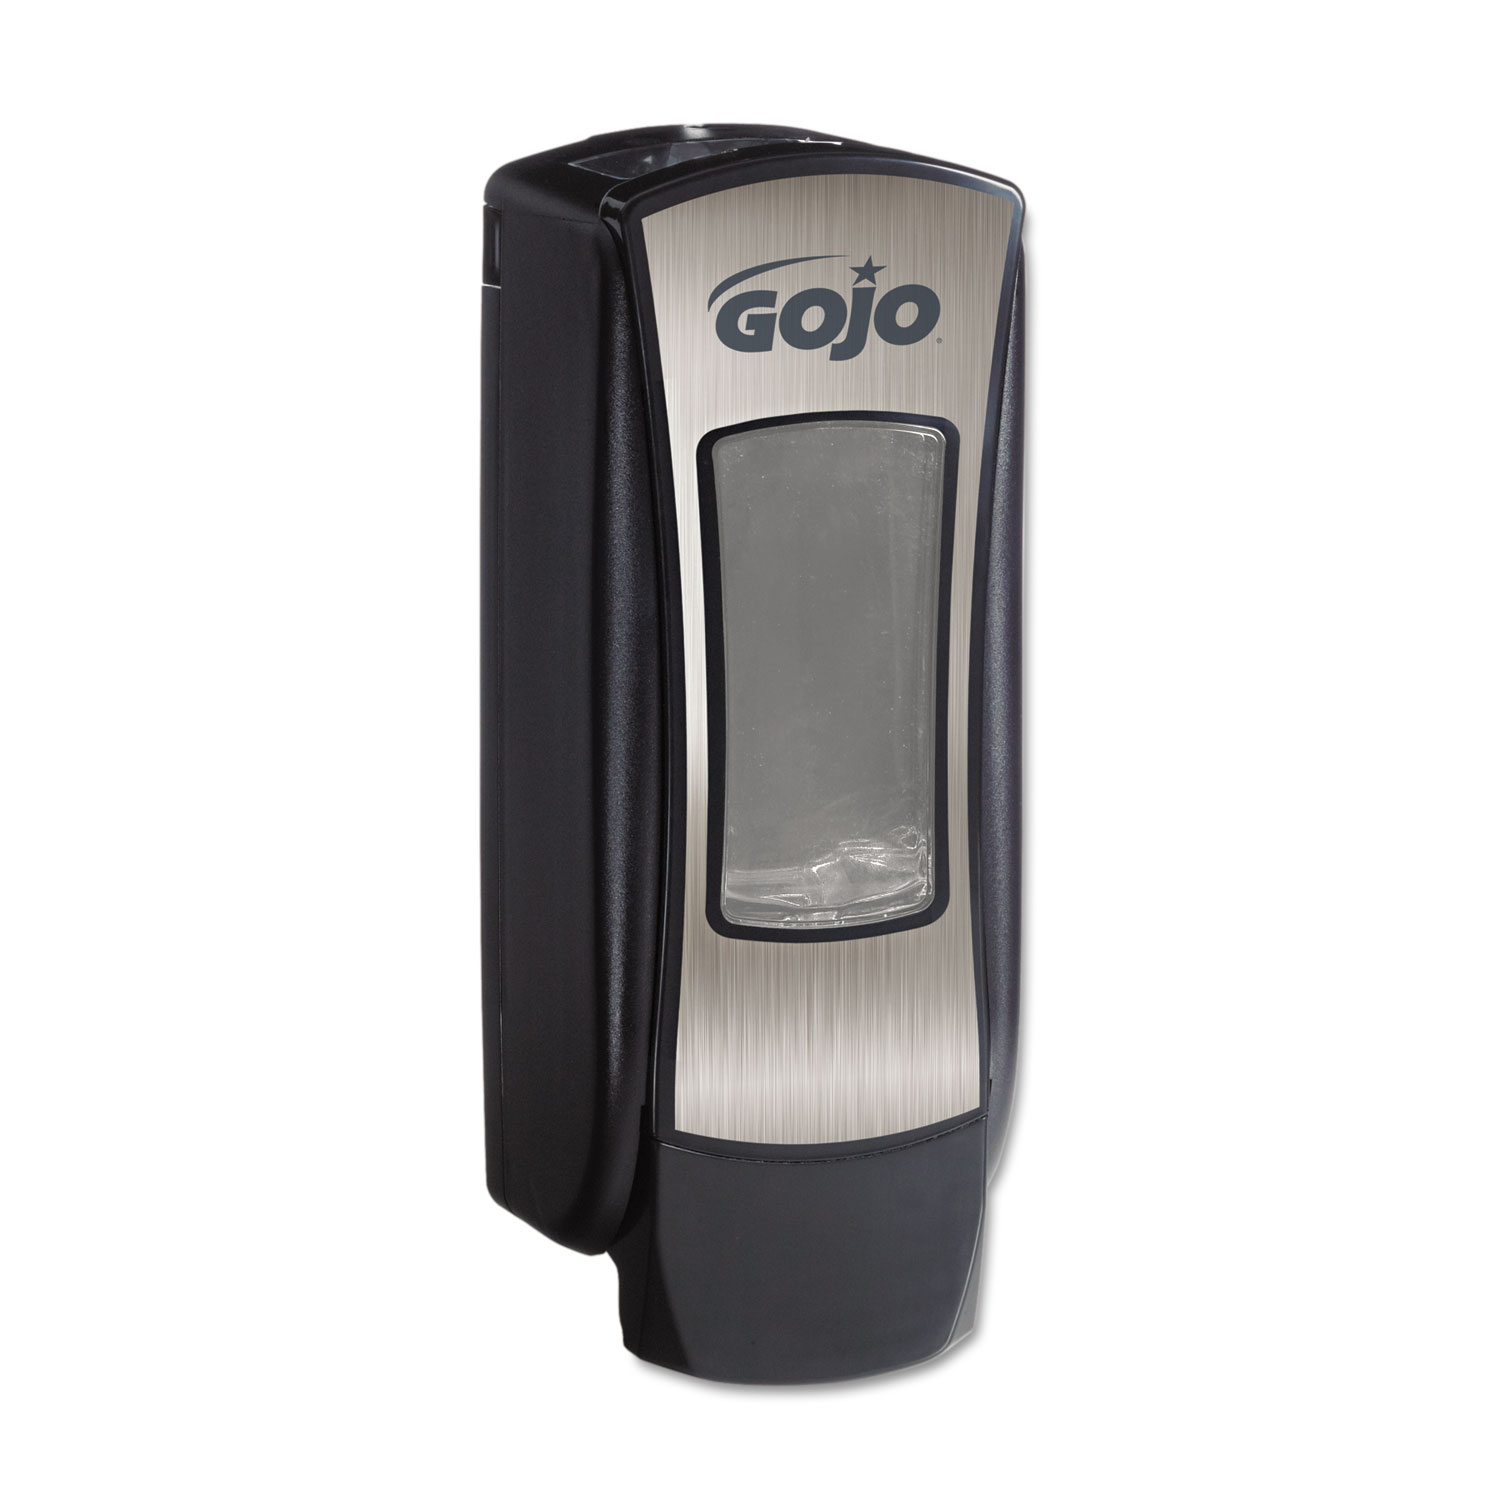  GOJO 8888-06 ADX-12 Dispenser, 1250 mL, 4.5 x 4 x 11.75, Brushed Chrome/Black (GOJ888806) 